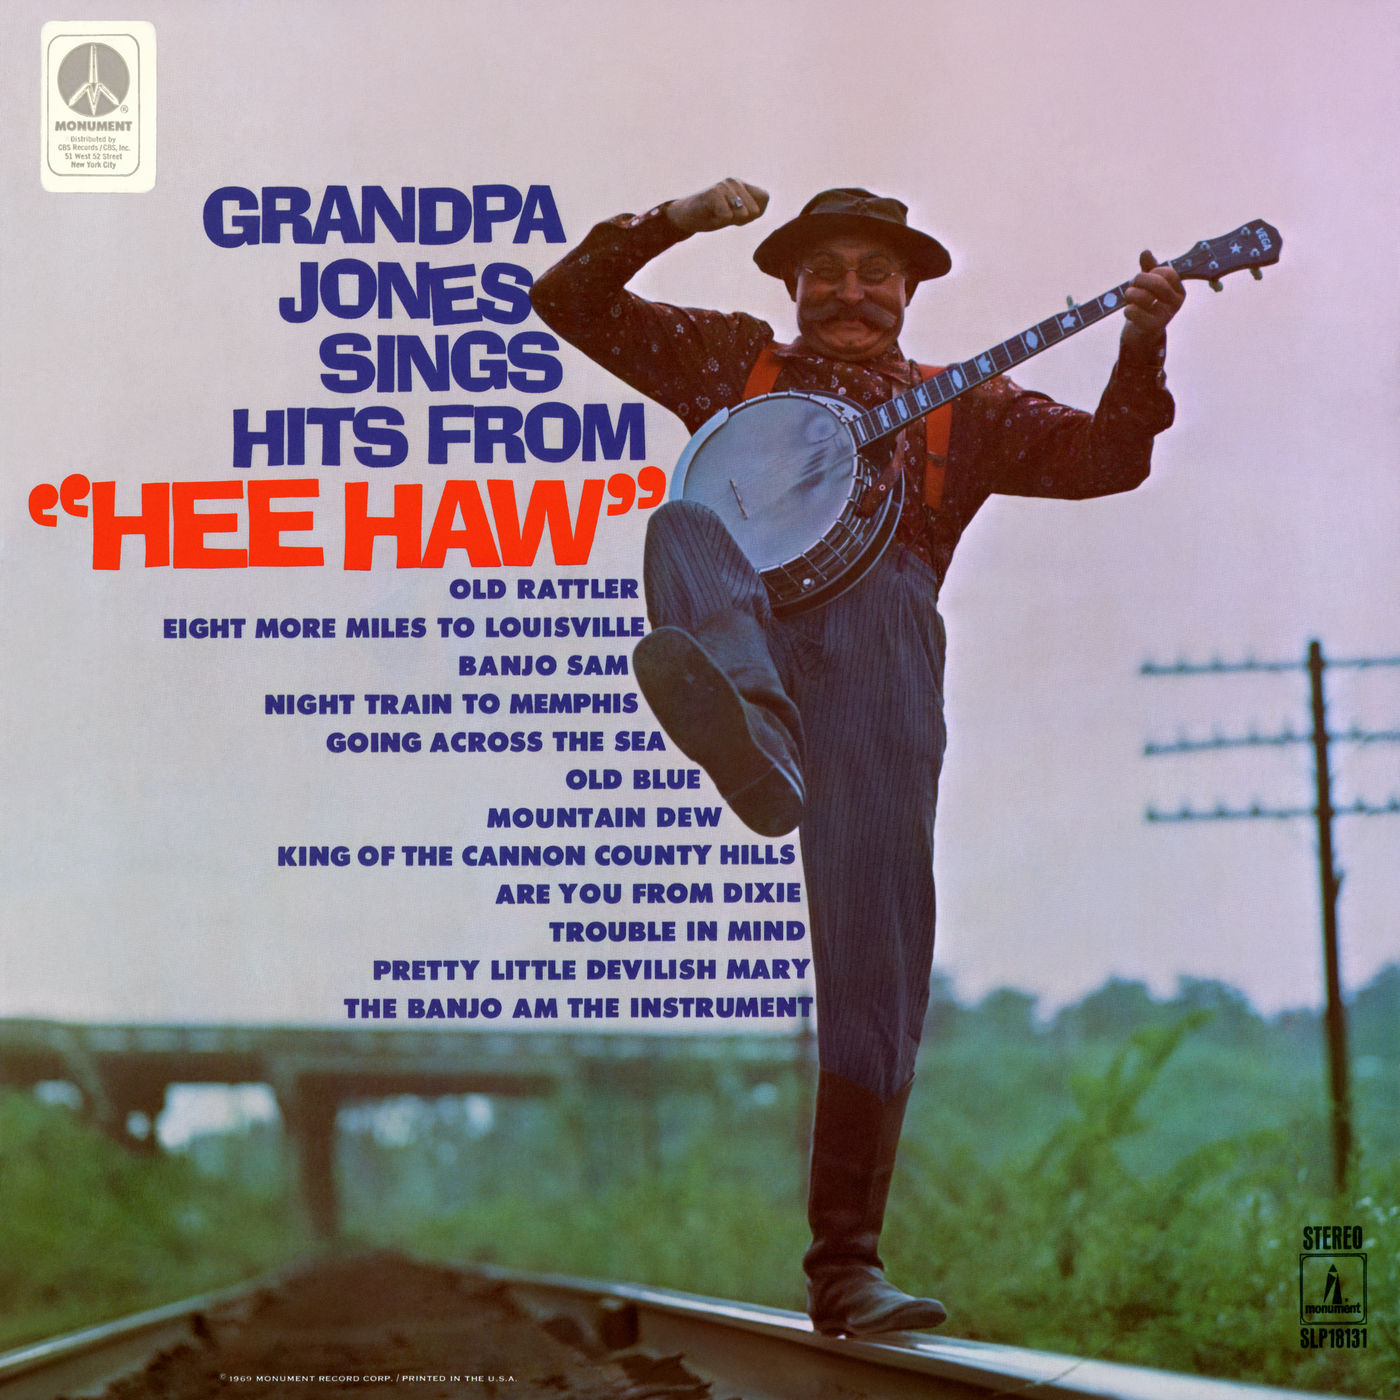 Grandpa Jones – Grandpa Jones Sings Hits from -Hee Haw-